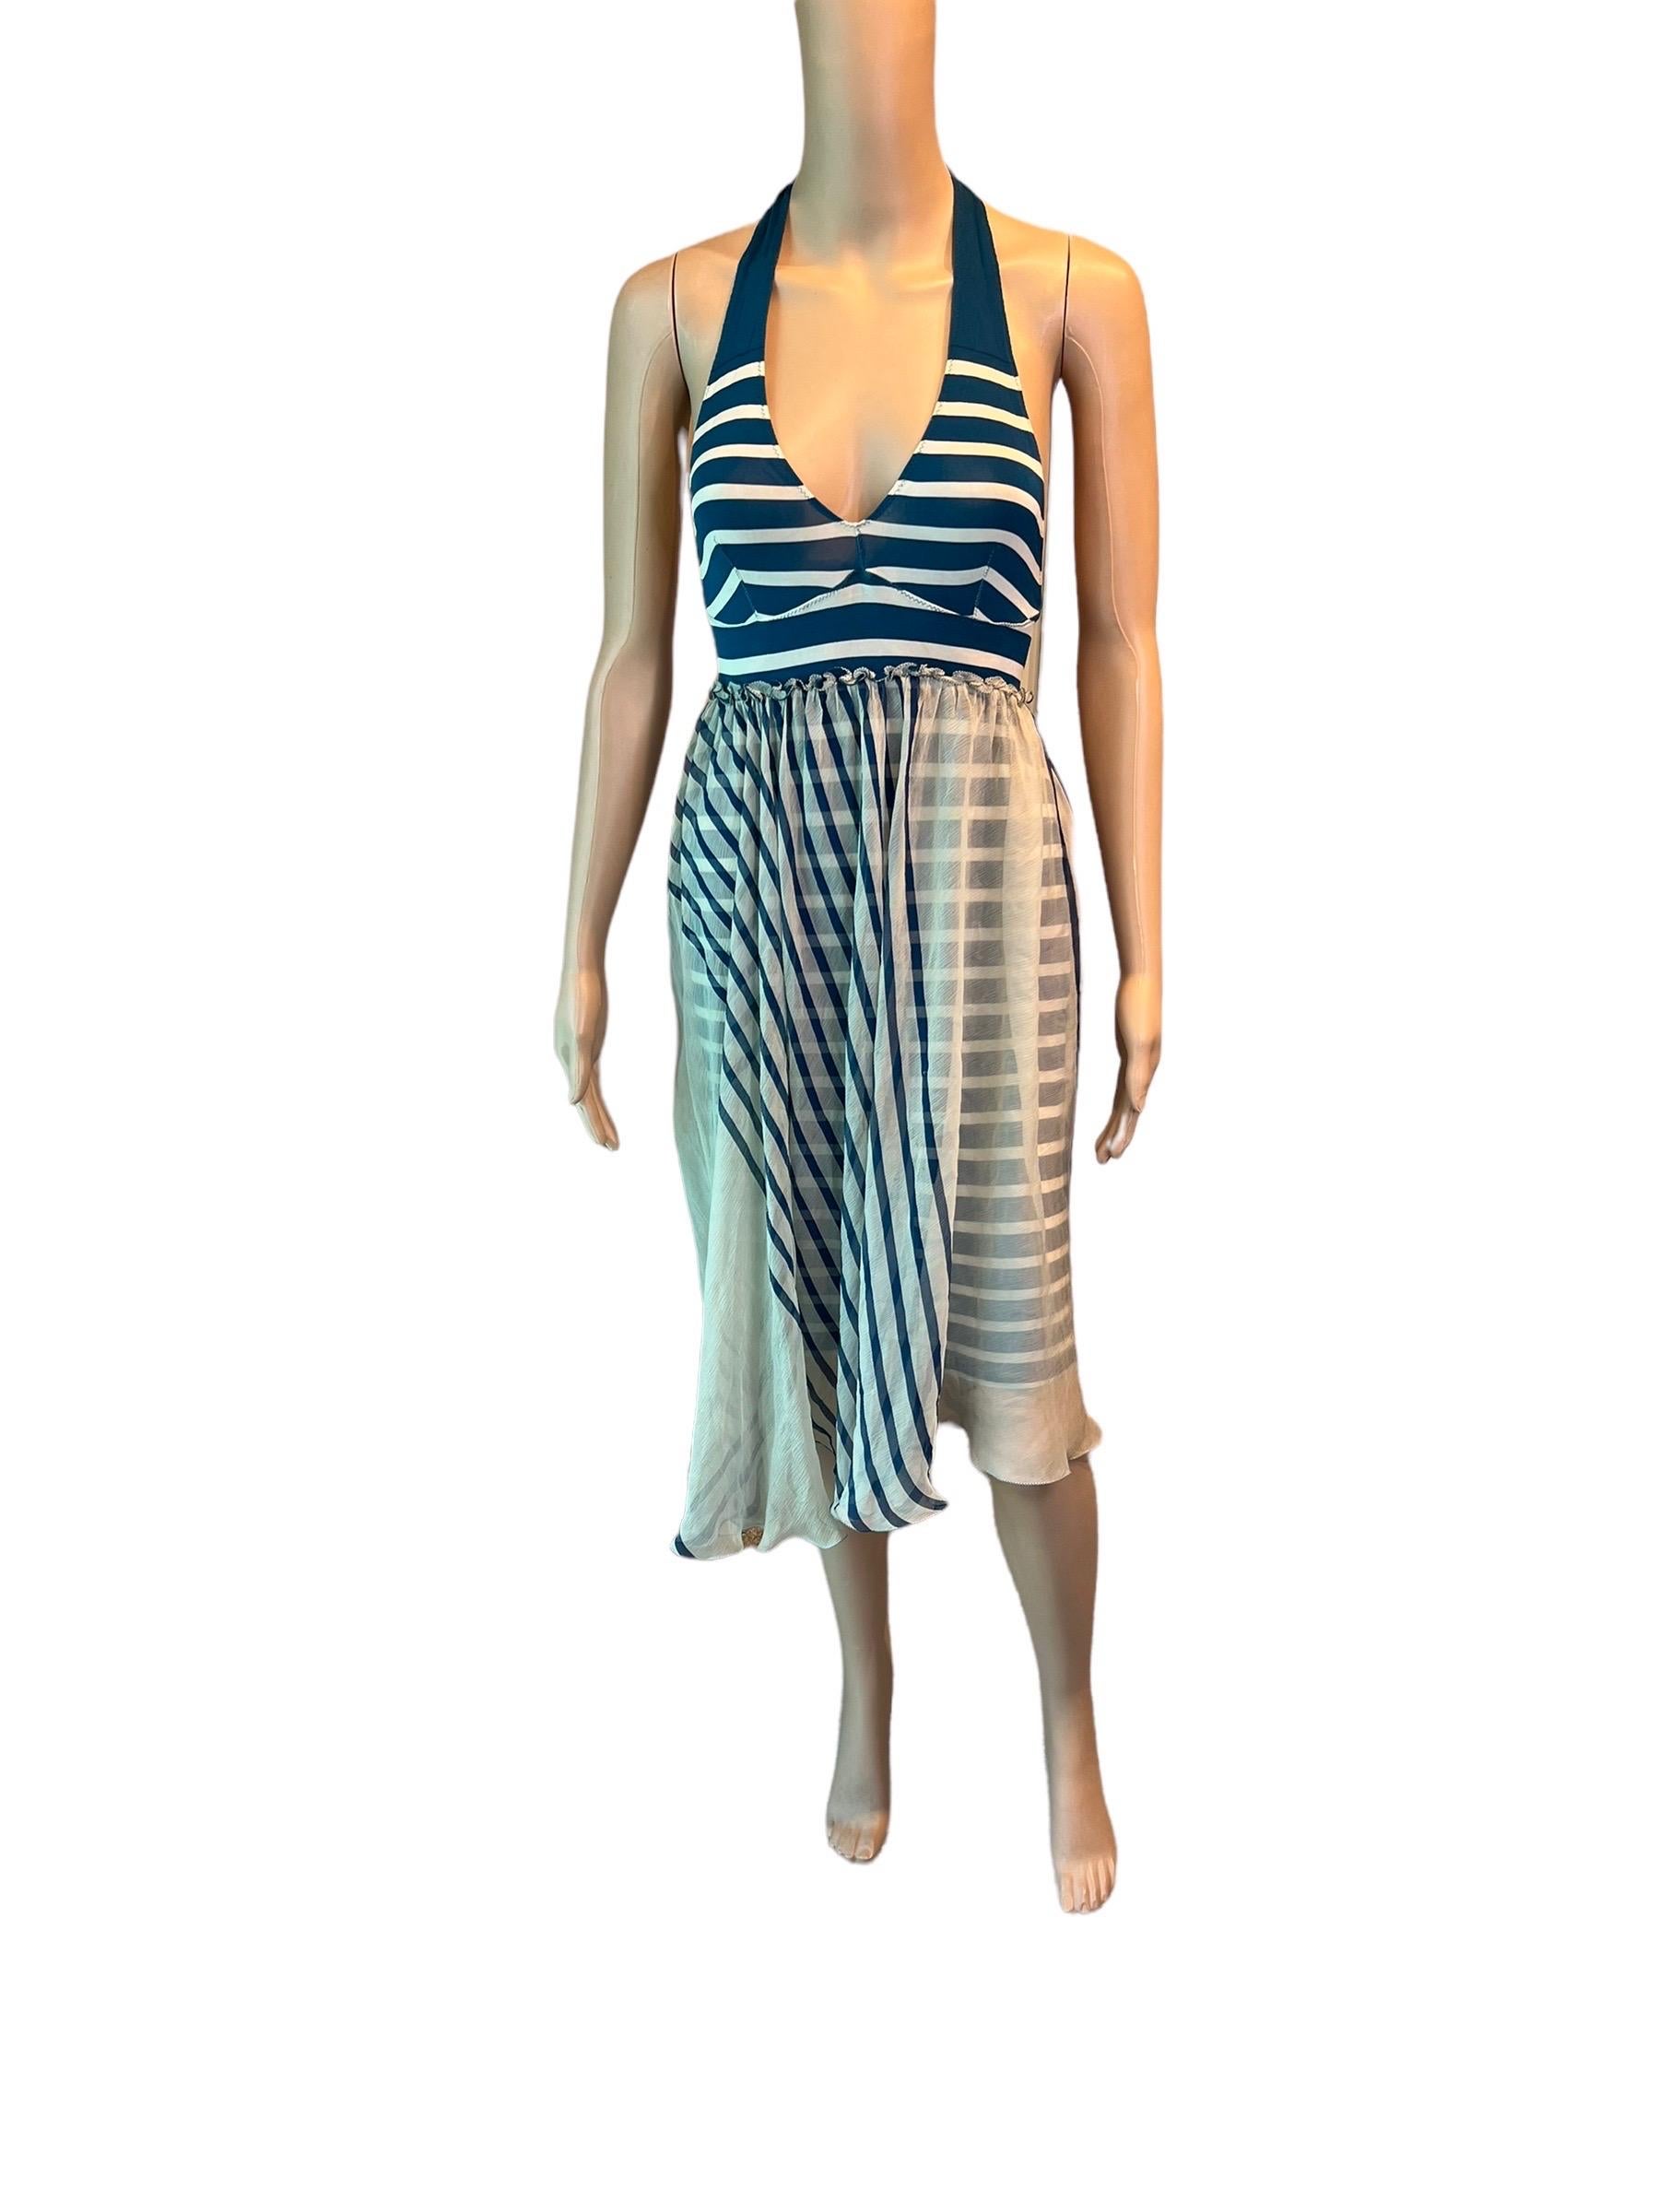 Women's or Men's Jean Paul Gaultier Soleil S/S 2001 Striped Ivory & Navy Blue Cutout Back Dress  For Sale